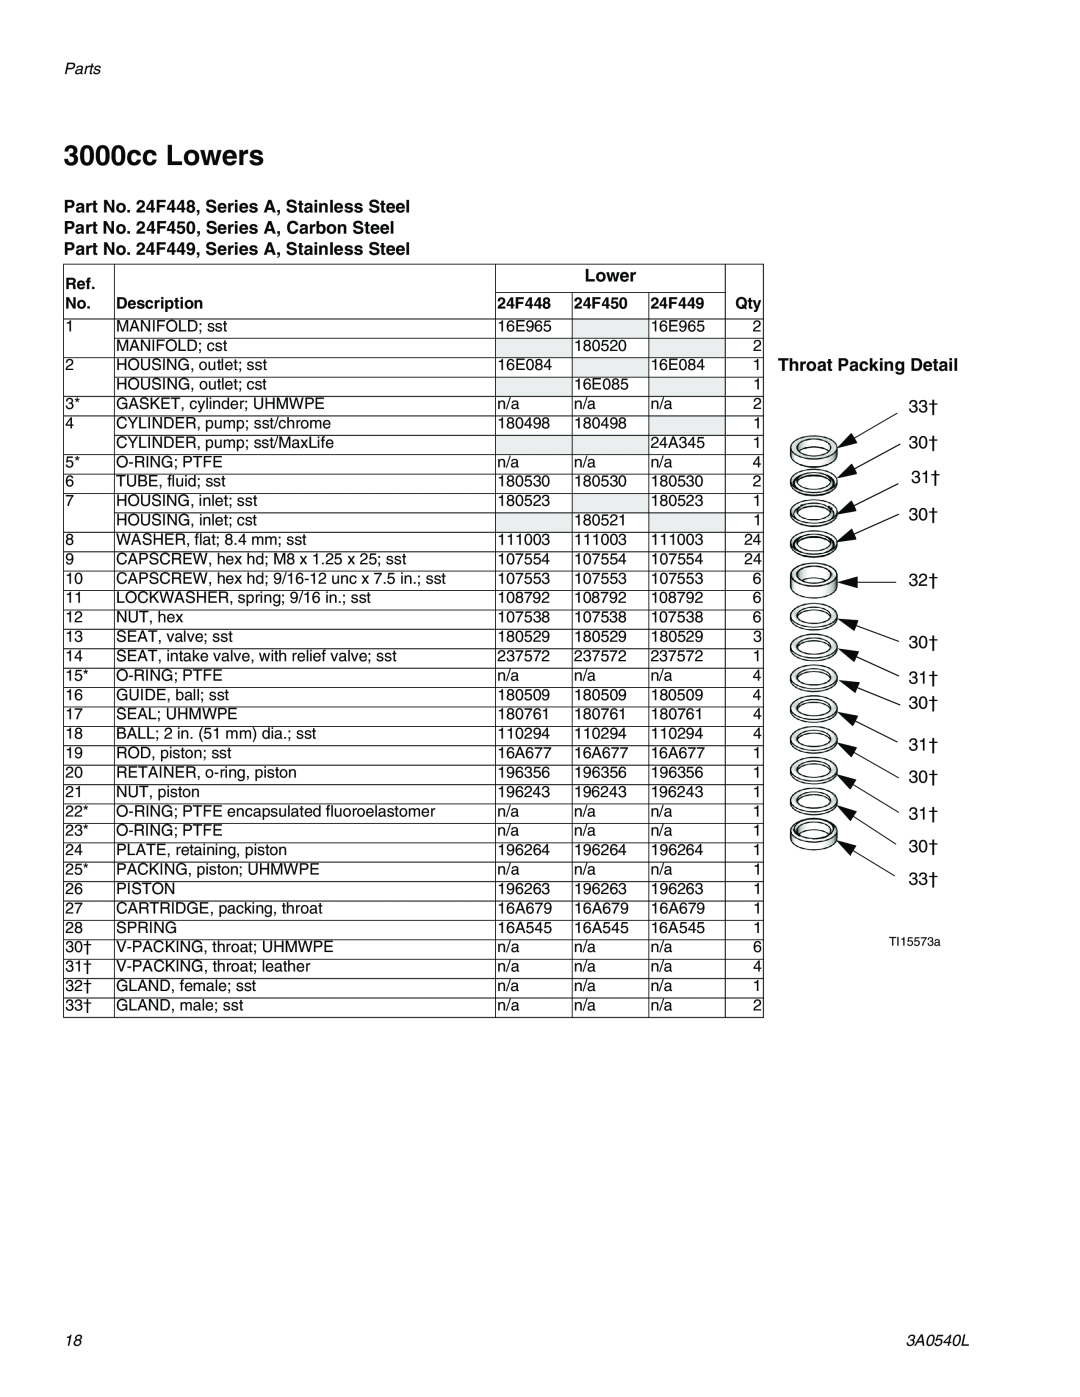 Graco 4000cc 3000cc Lowers, Part No. 24F448, Series A, Stainless Steel, Part No. 24F450, Series A, Carbon Steel, Parts 